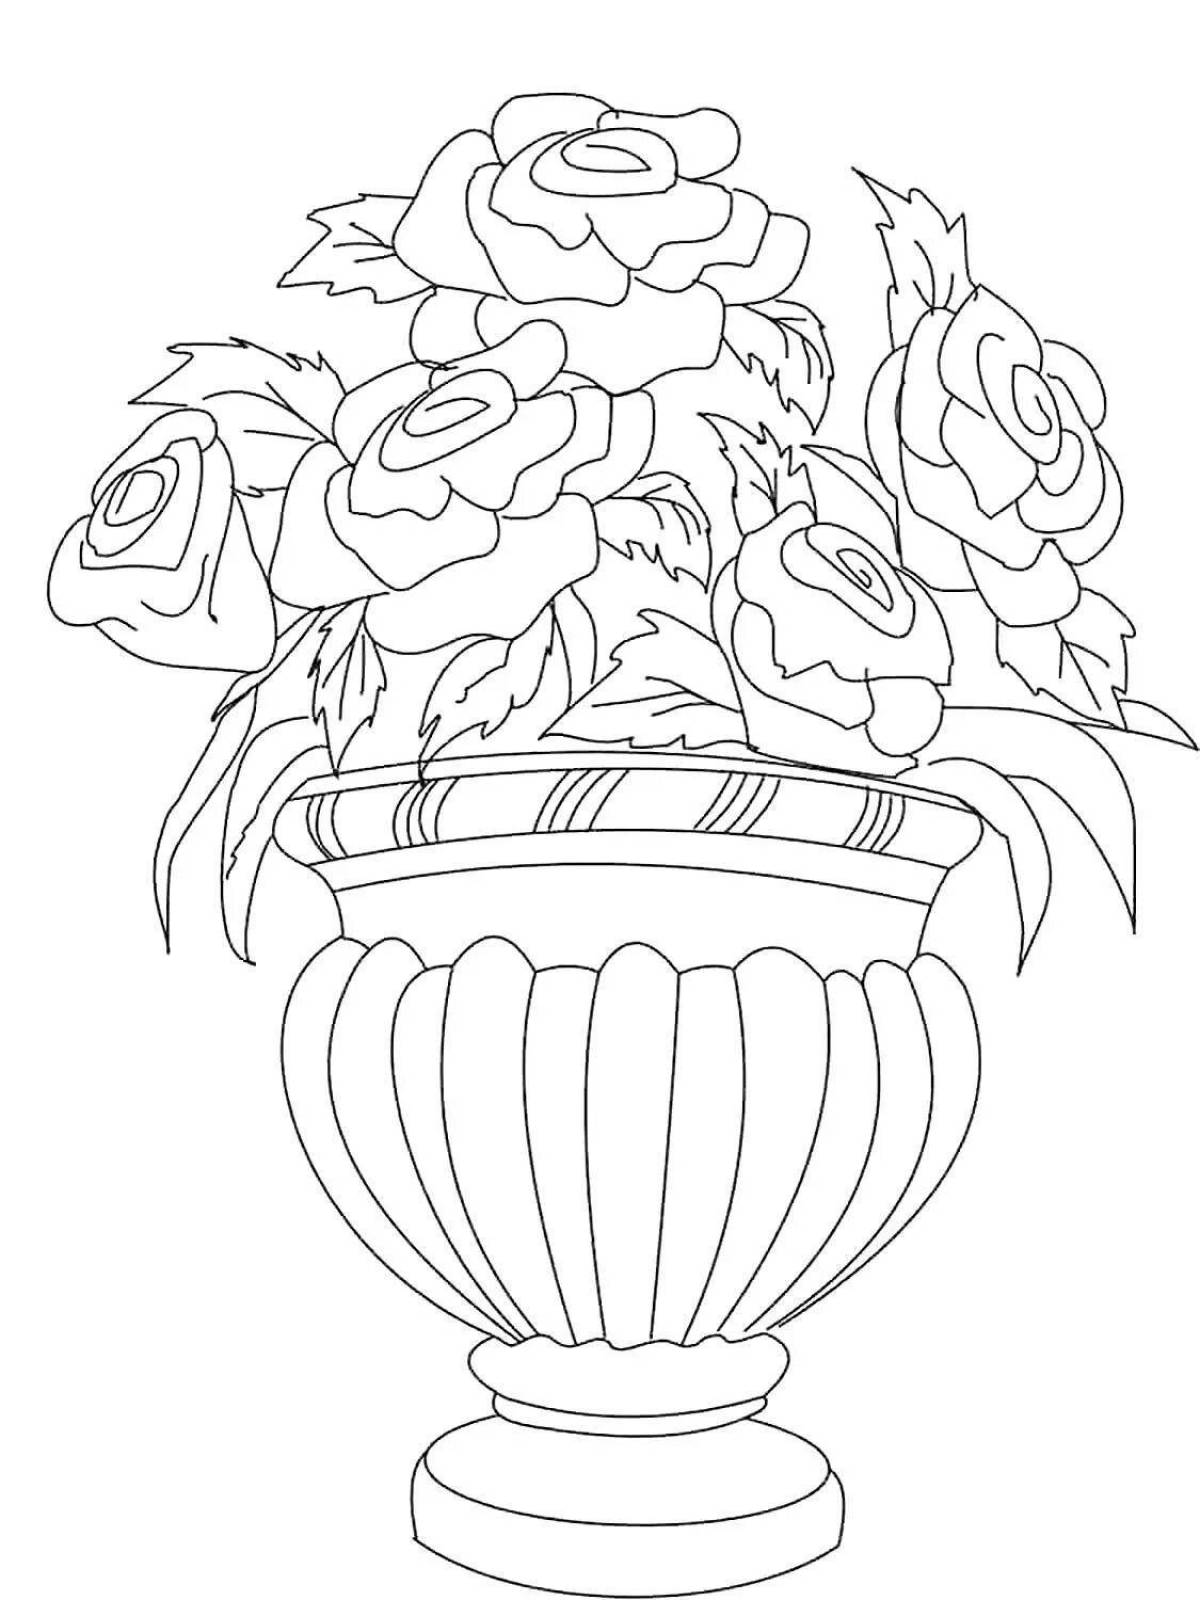 Раскраска великолепная ваза с цветами